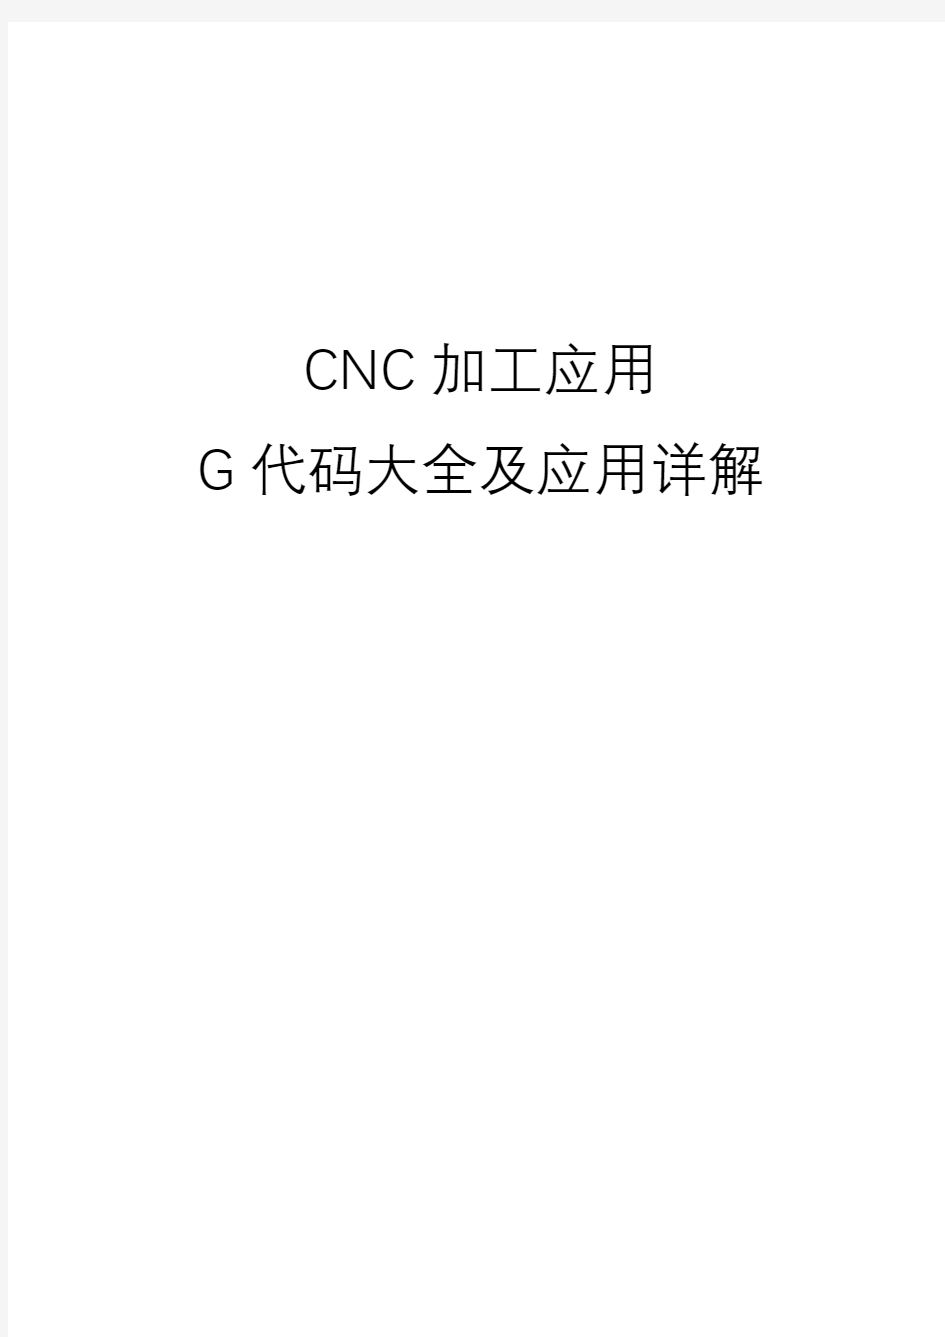 CNC G代码大全及加工应用详解